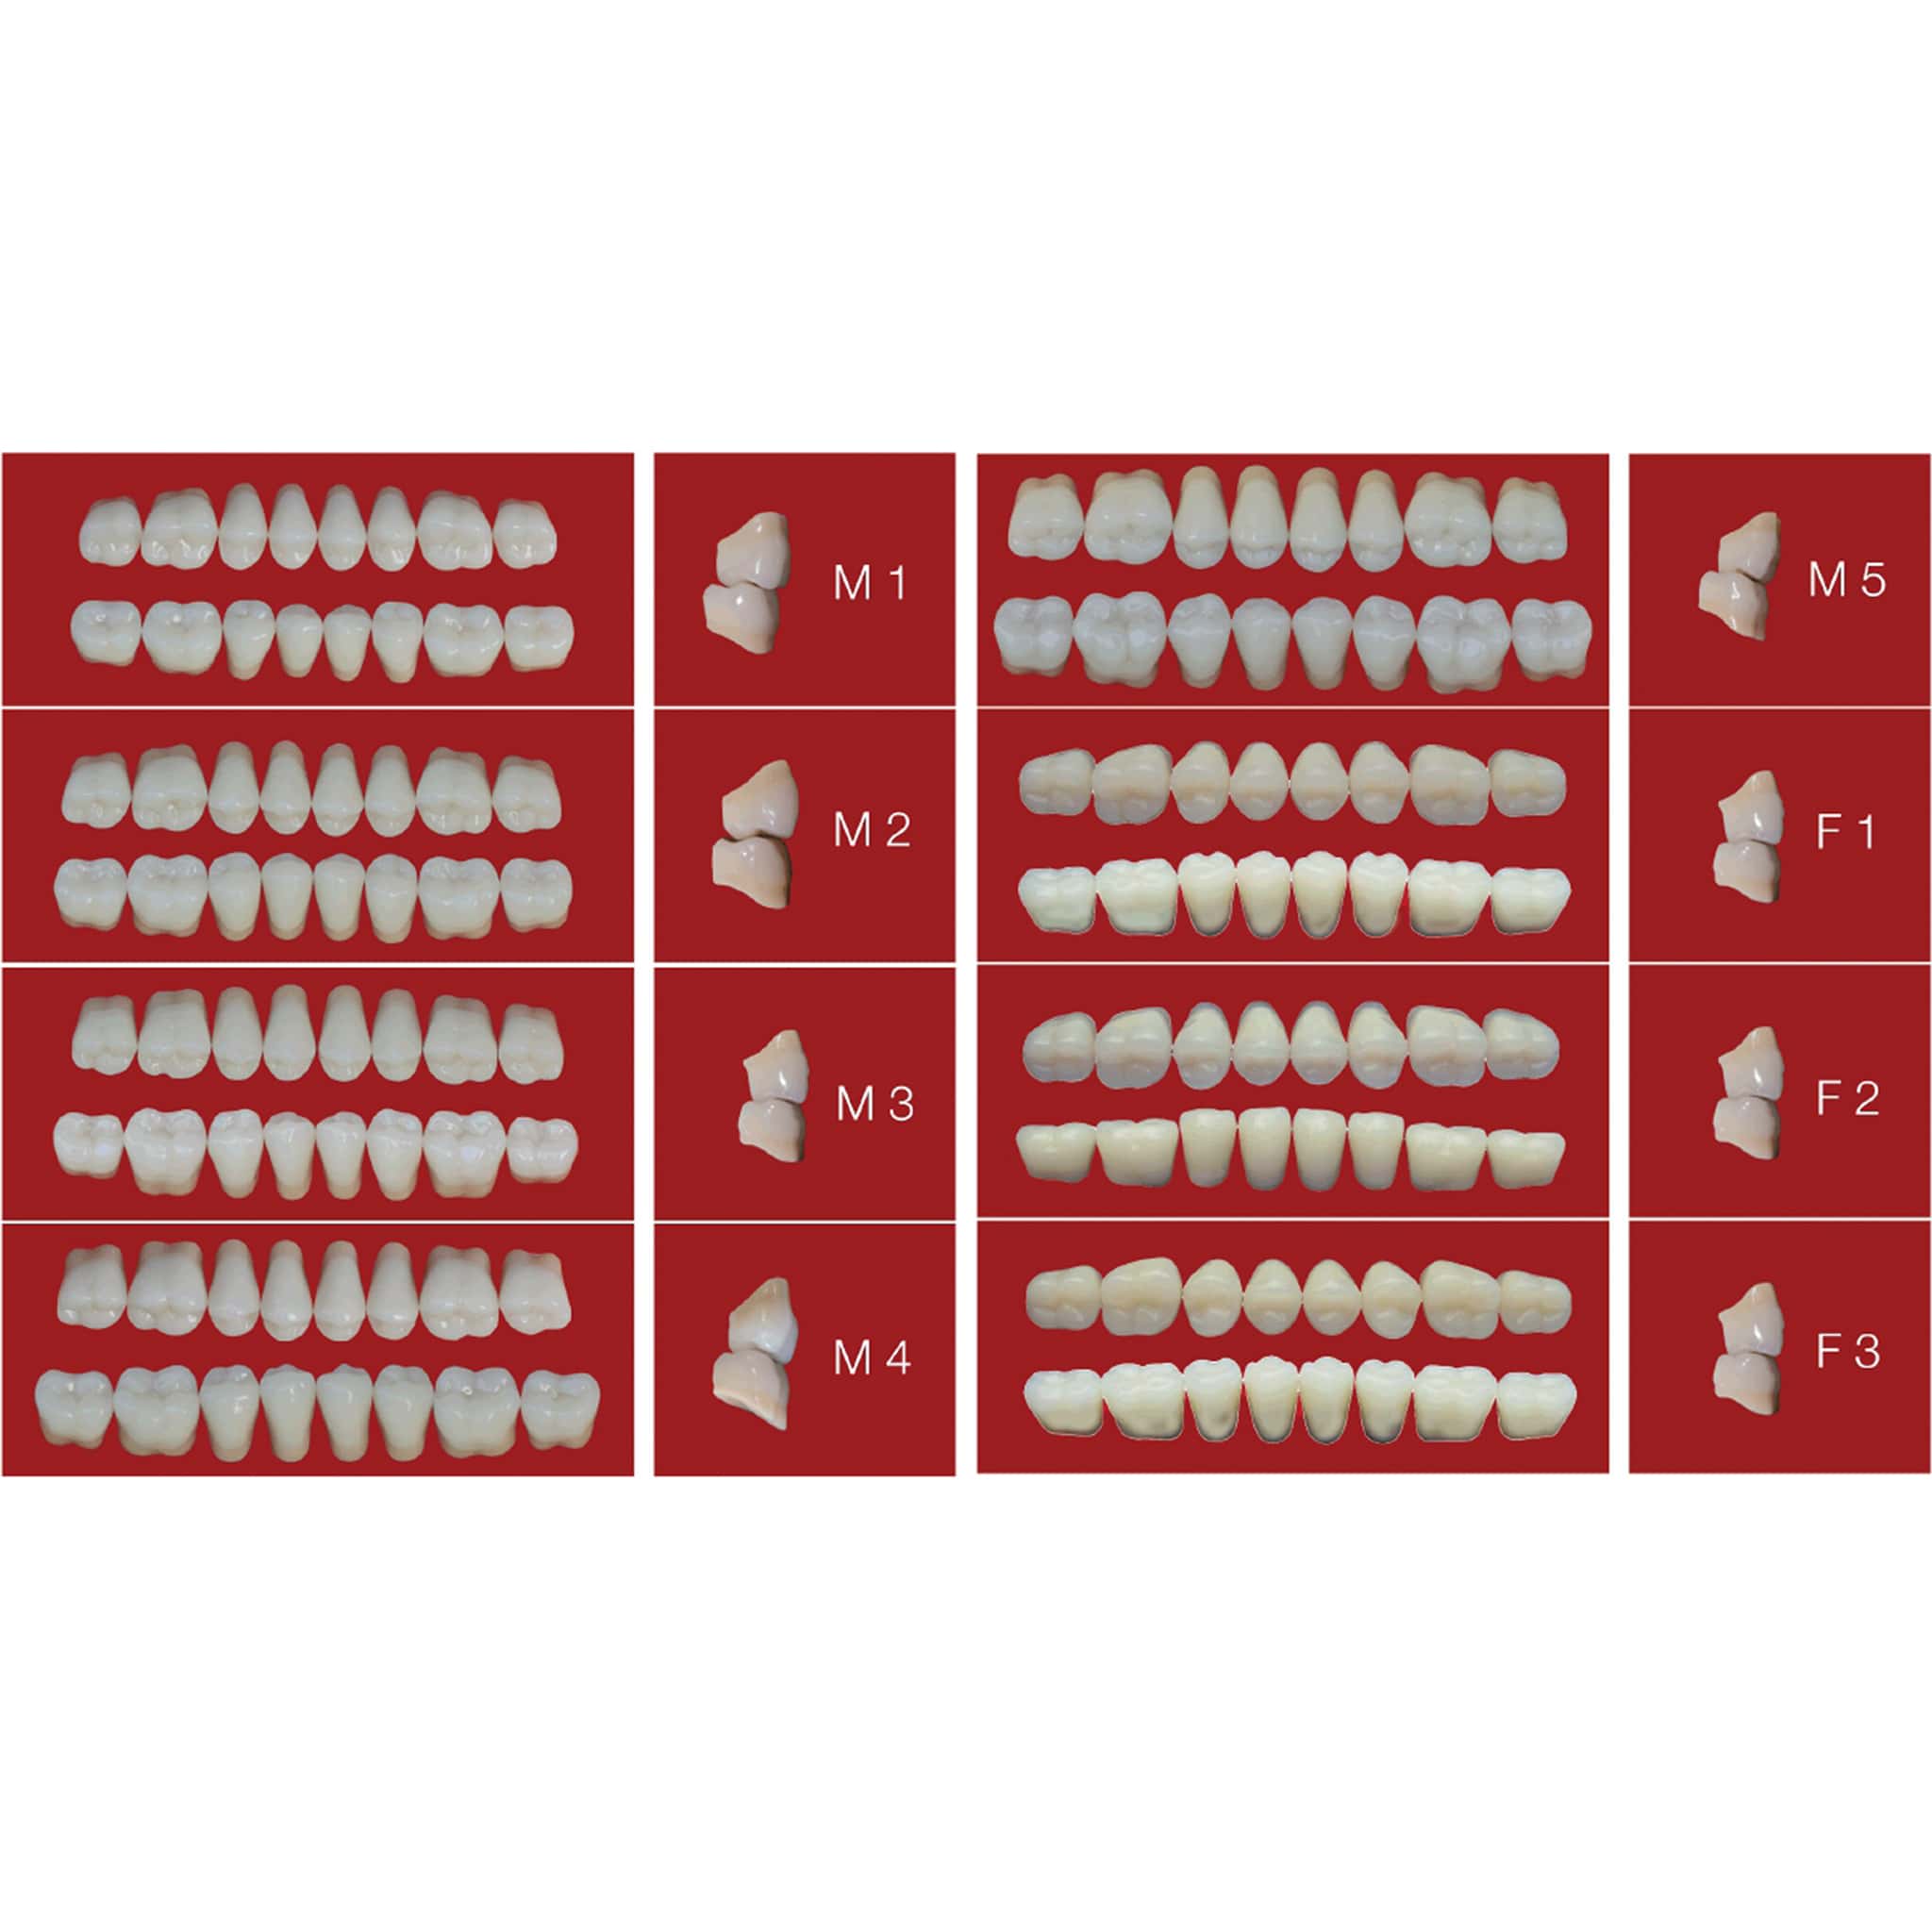 MR Dental Medi-Lux Full Set C2 Shade (Box of 4)